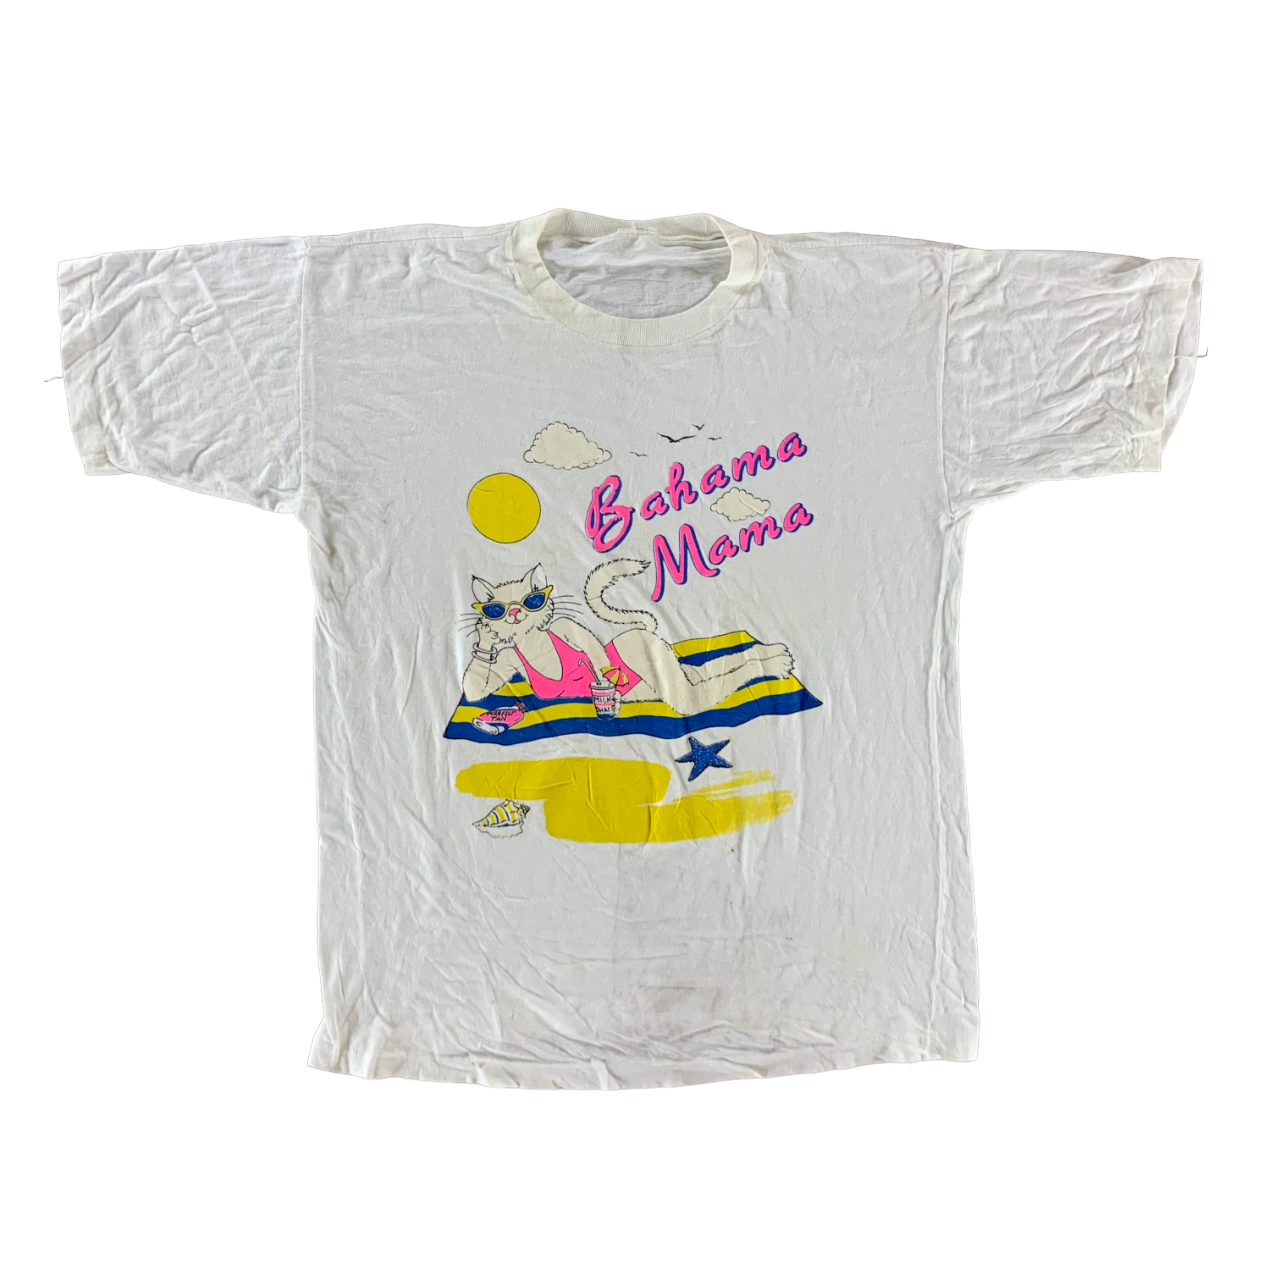 Vintage 1980s Bahama Mama T-shirt size XL